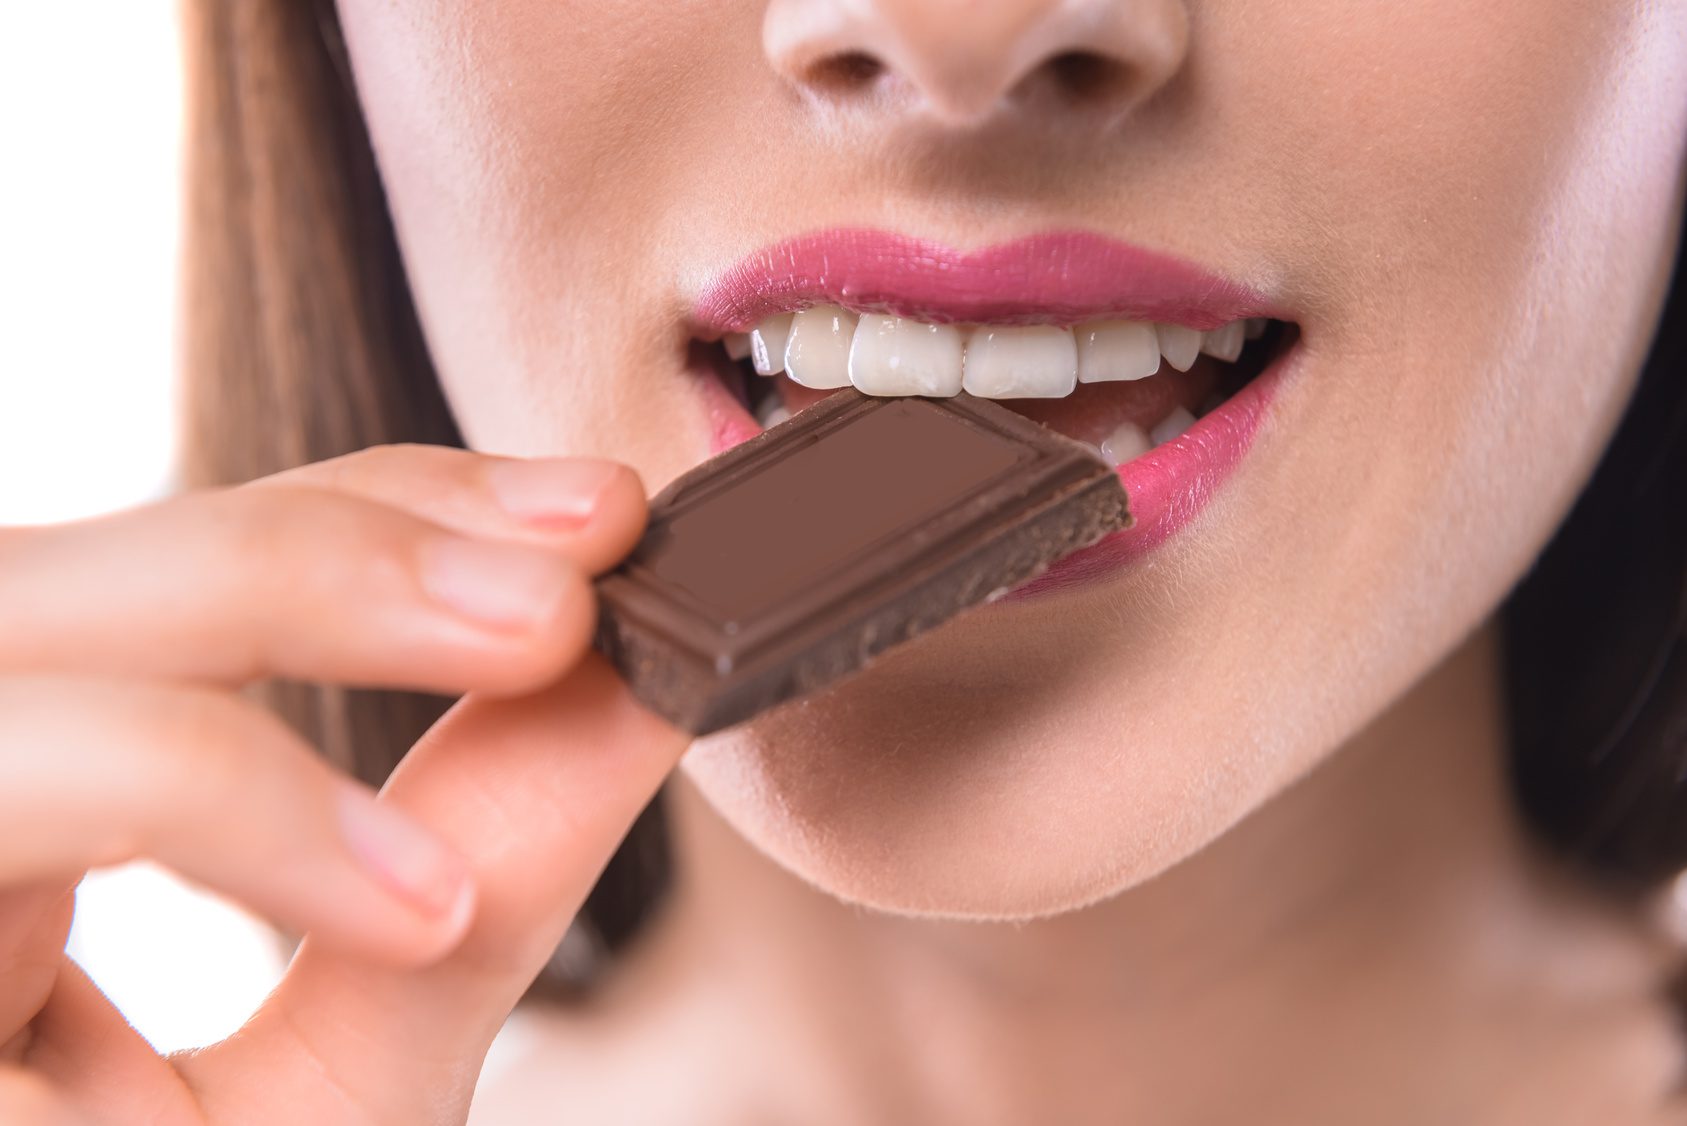 chocolate - aphrodisiac that boosts libido